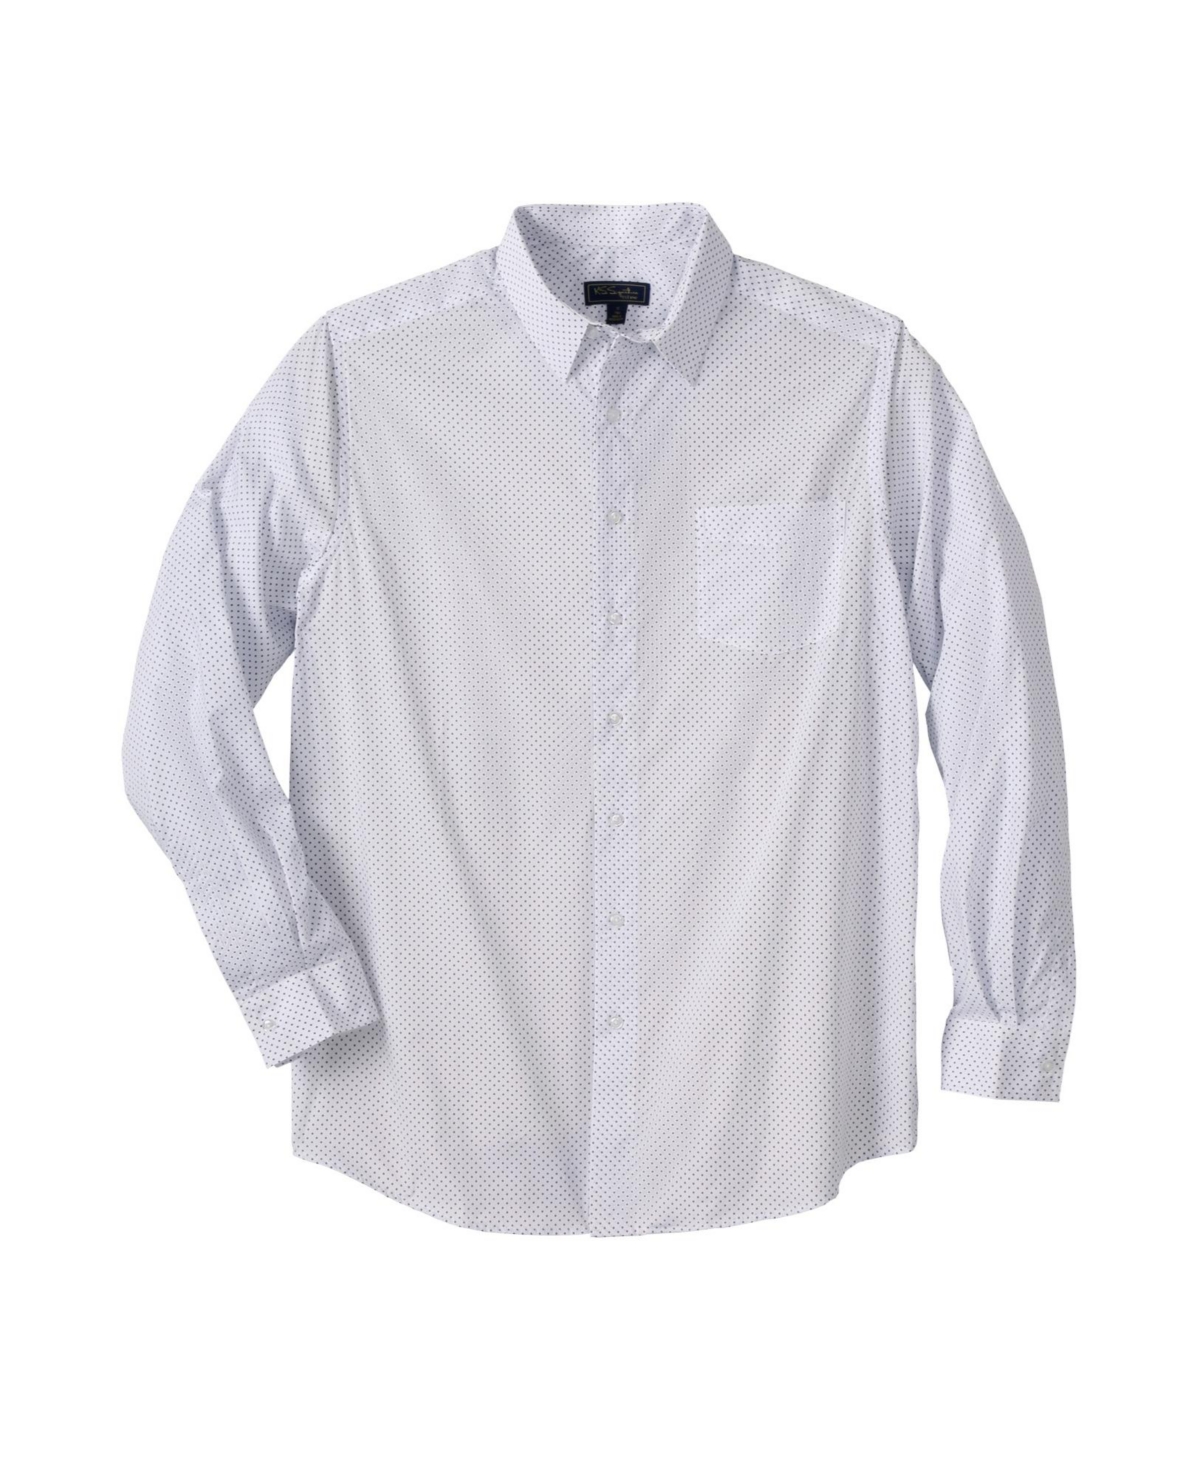 Big & Tall Wrinkle-Free Long-Sleeve Dress Shirt - White navy pindot